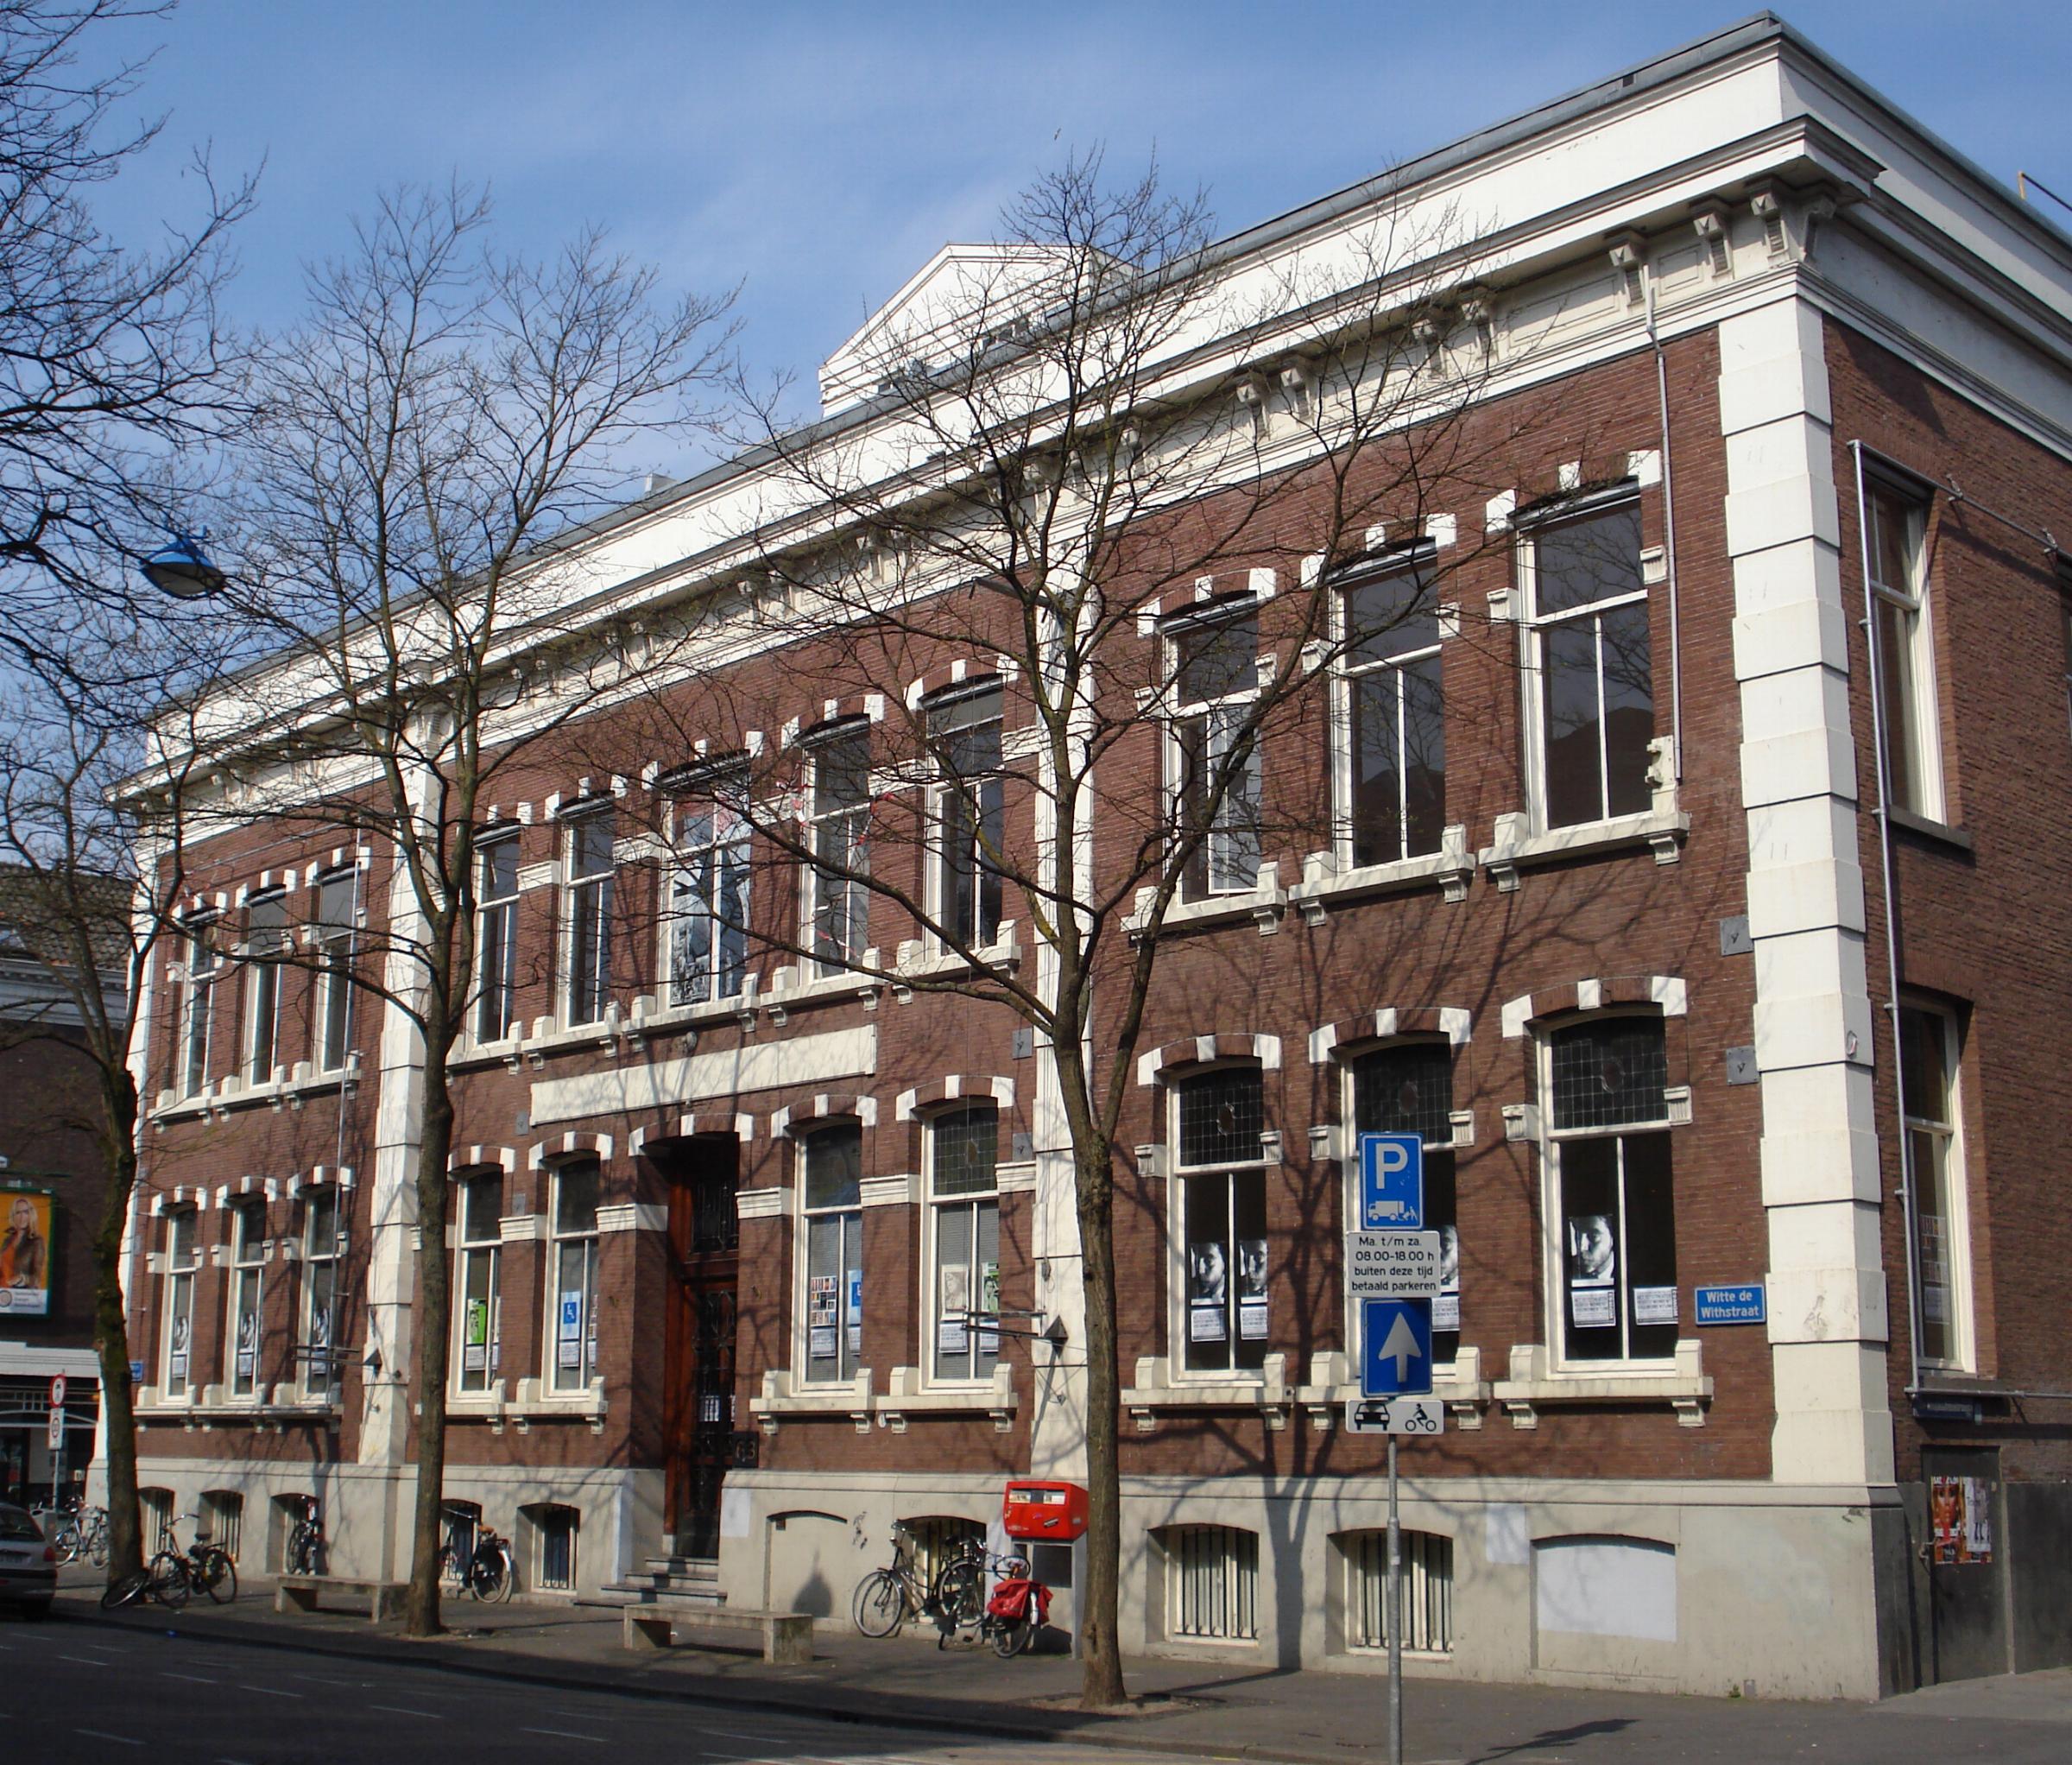 File:Rotterdam witte de withstraat63.jpg - Wikimedia Commons